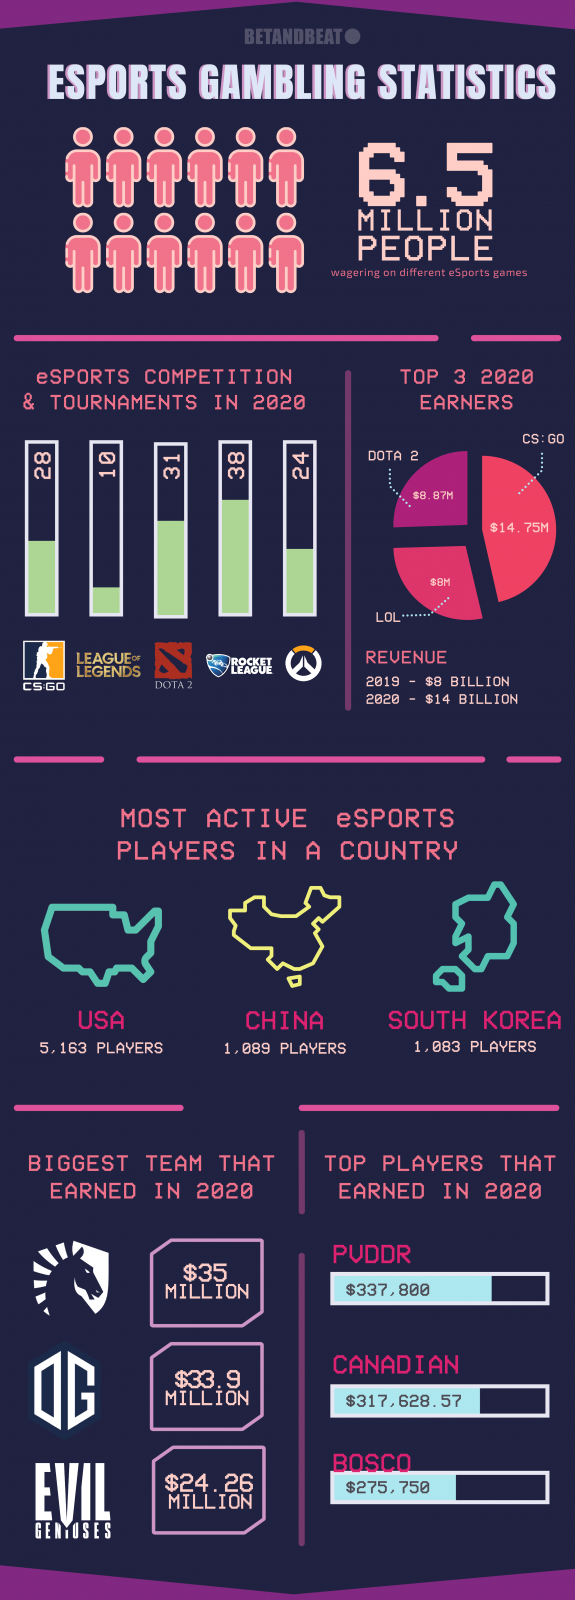 eSports Gambling Statistics